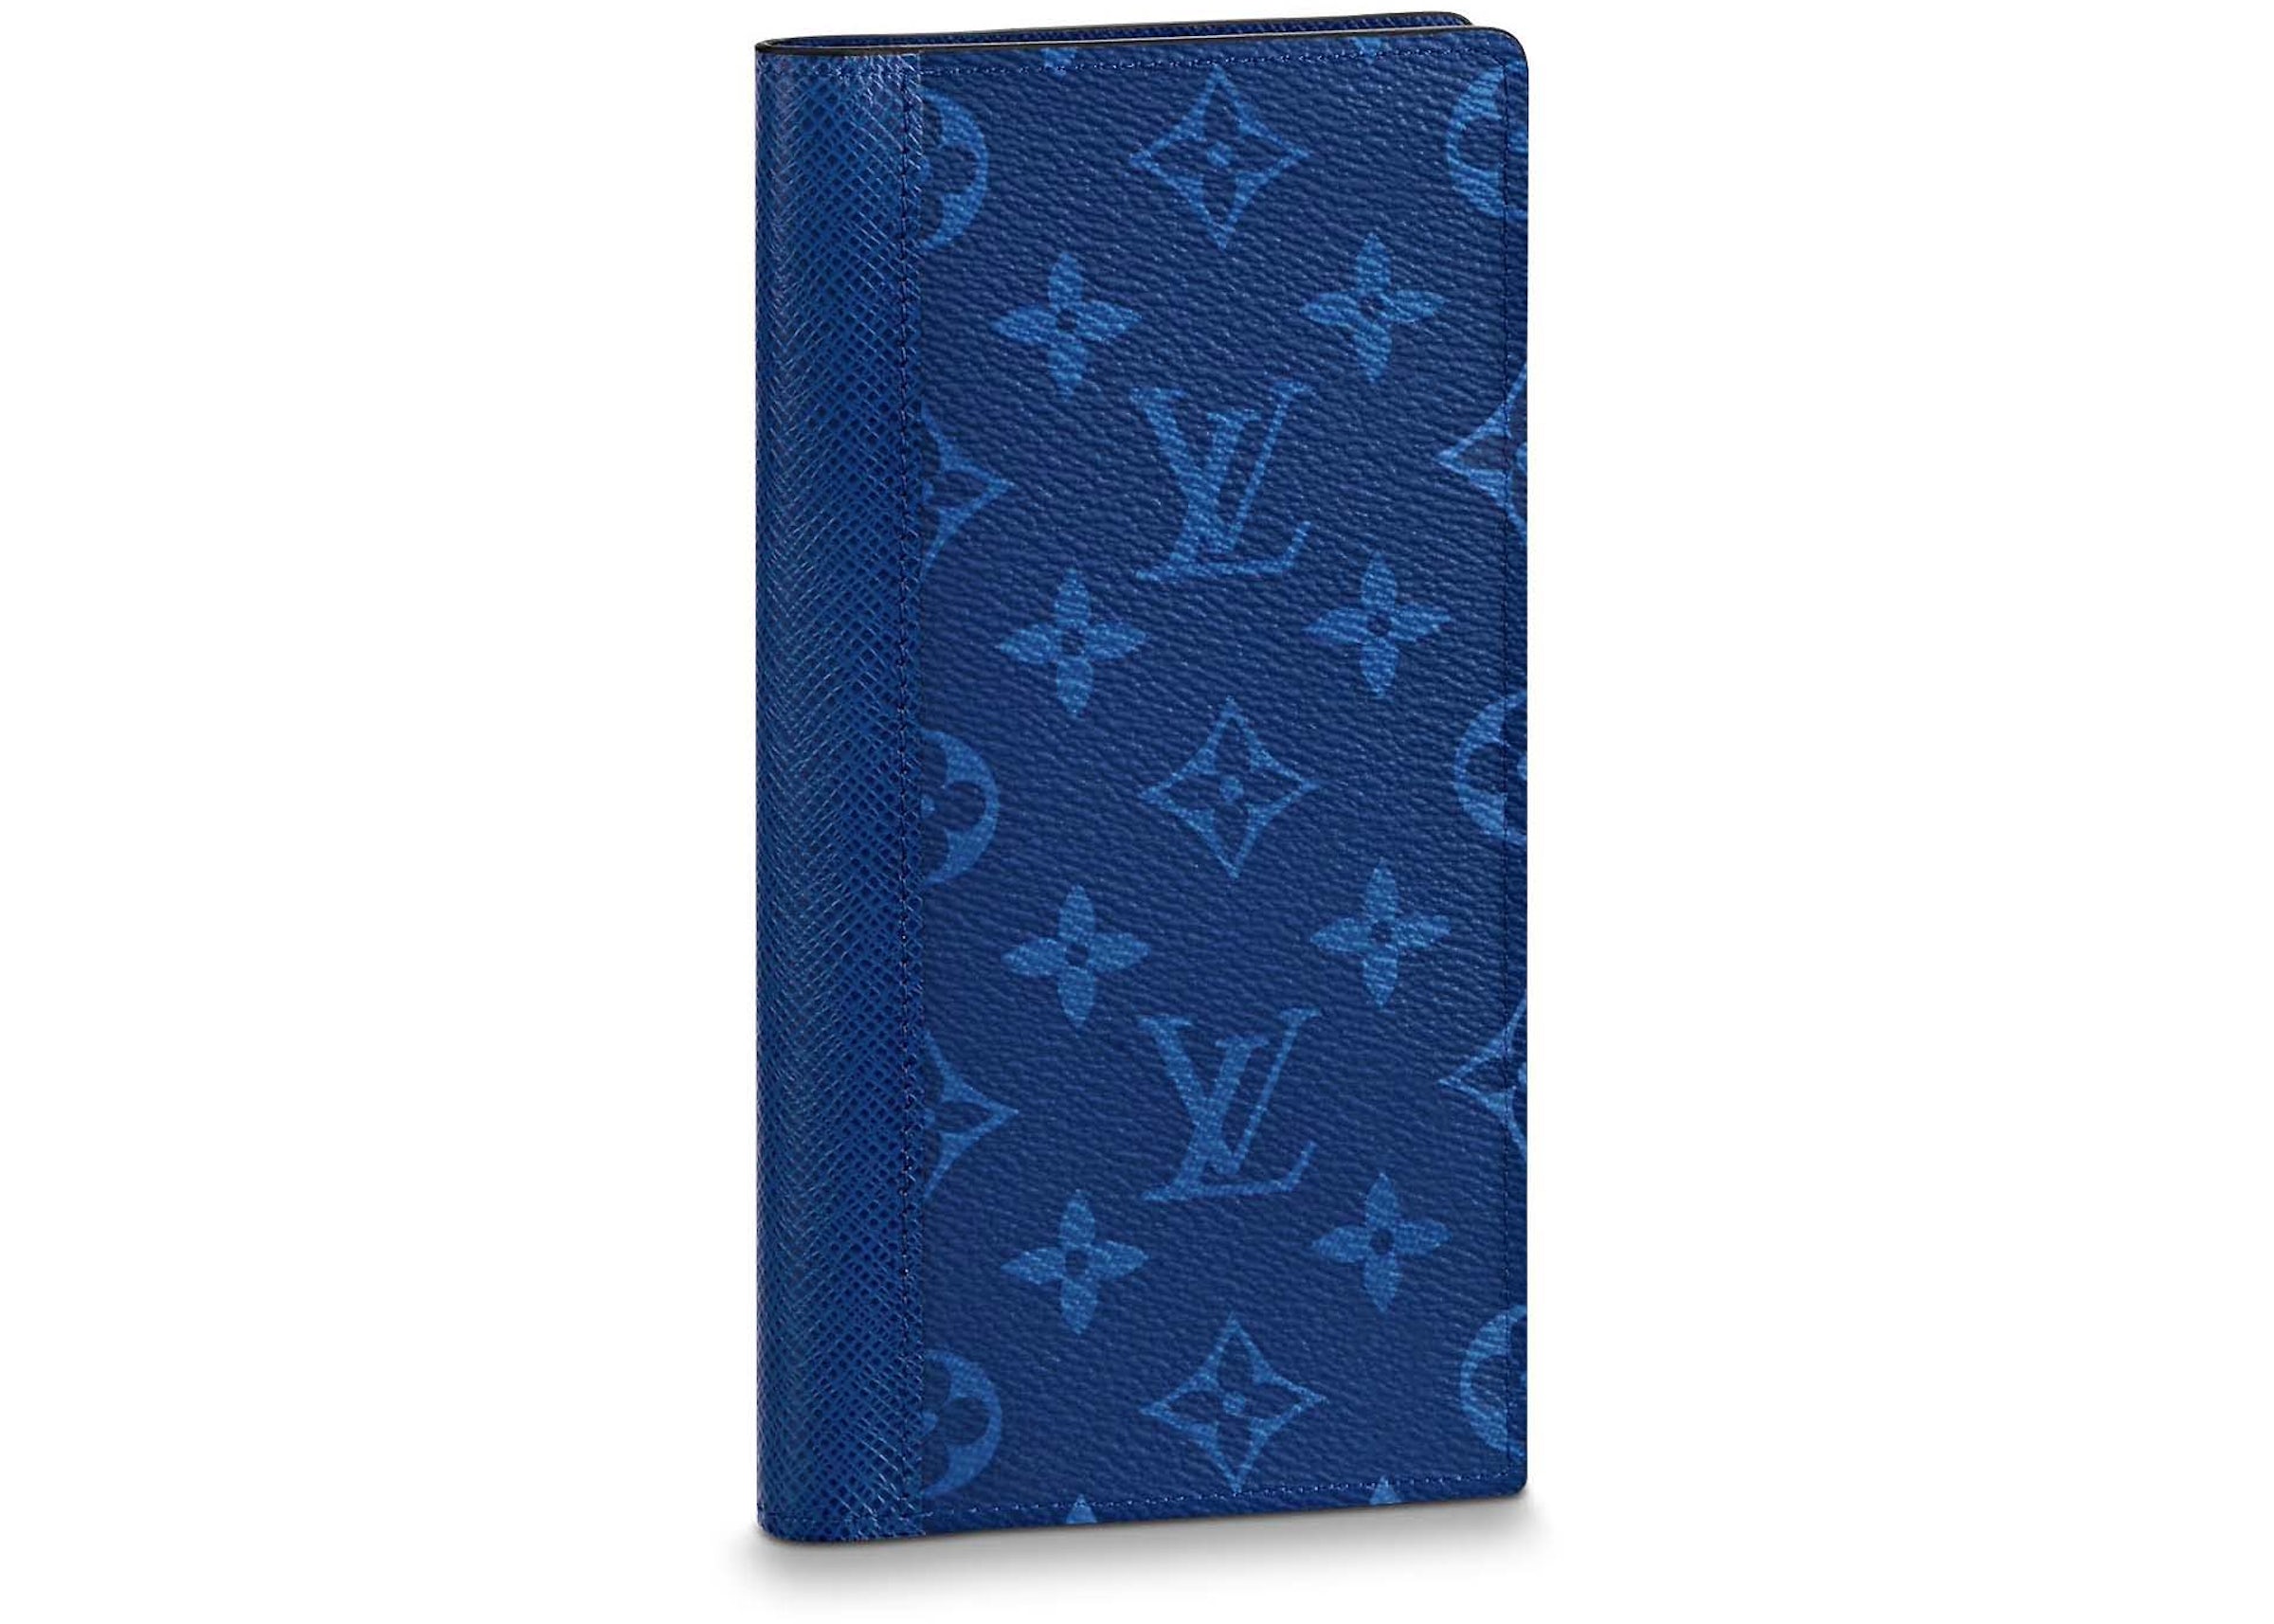 Louis Vuitton Brazza Wallet Navy Blue in Monogram Coated Canvas